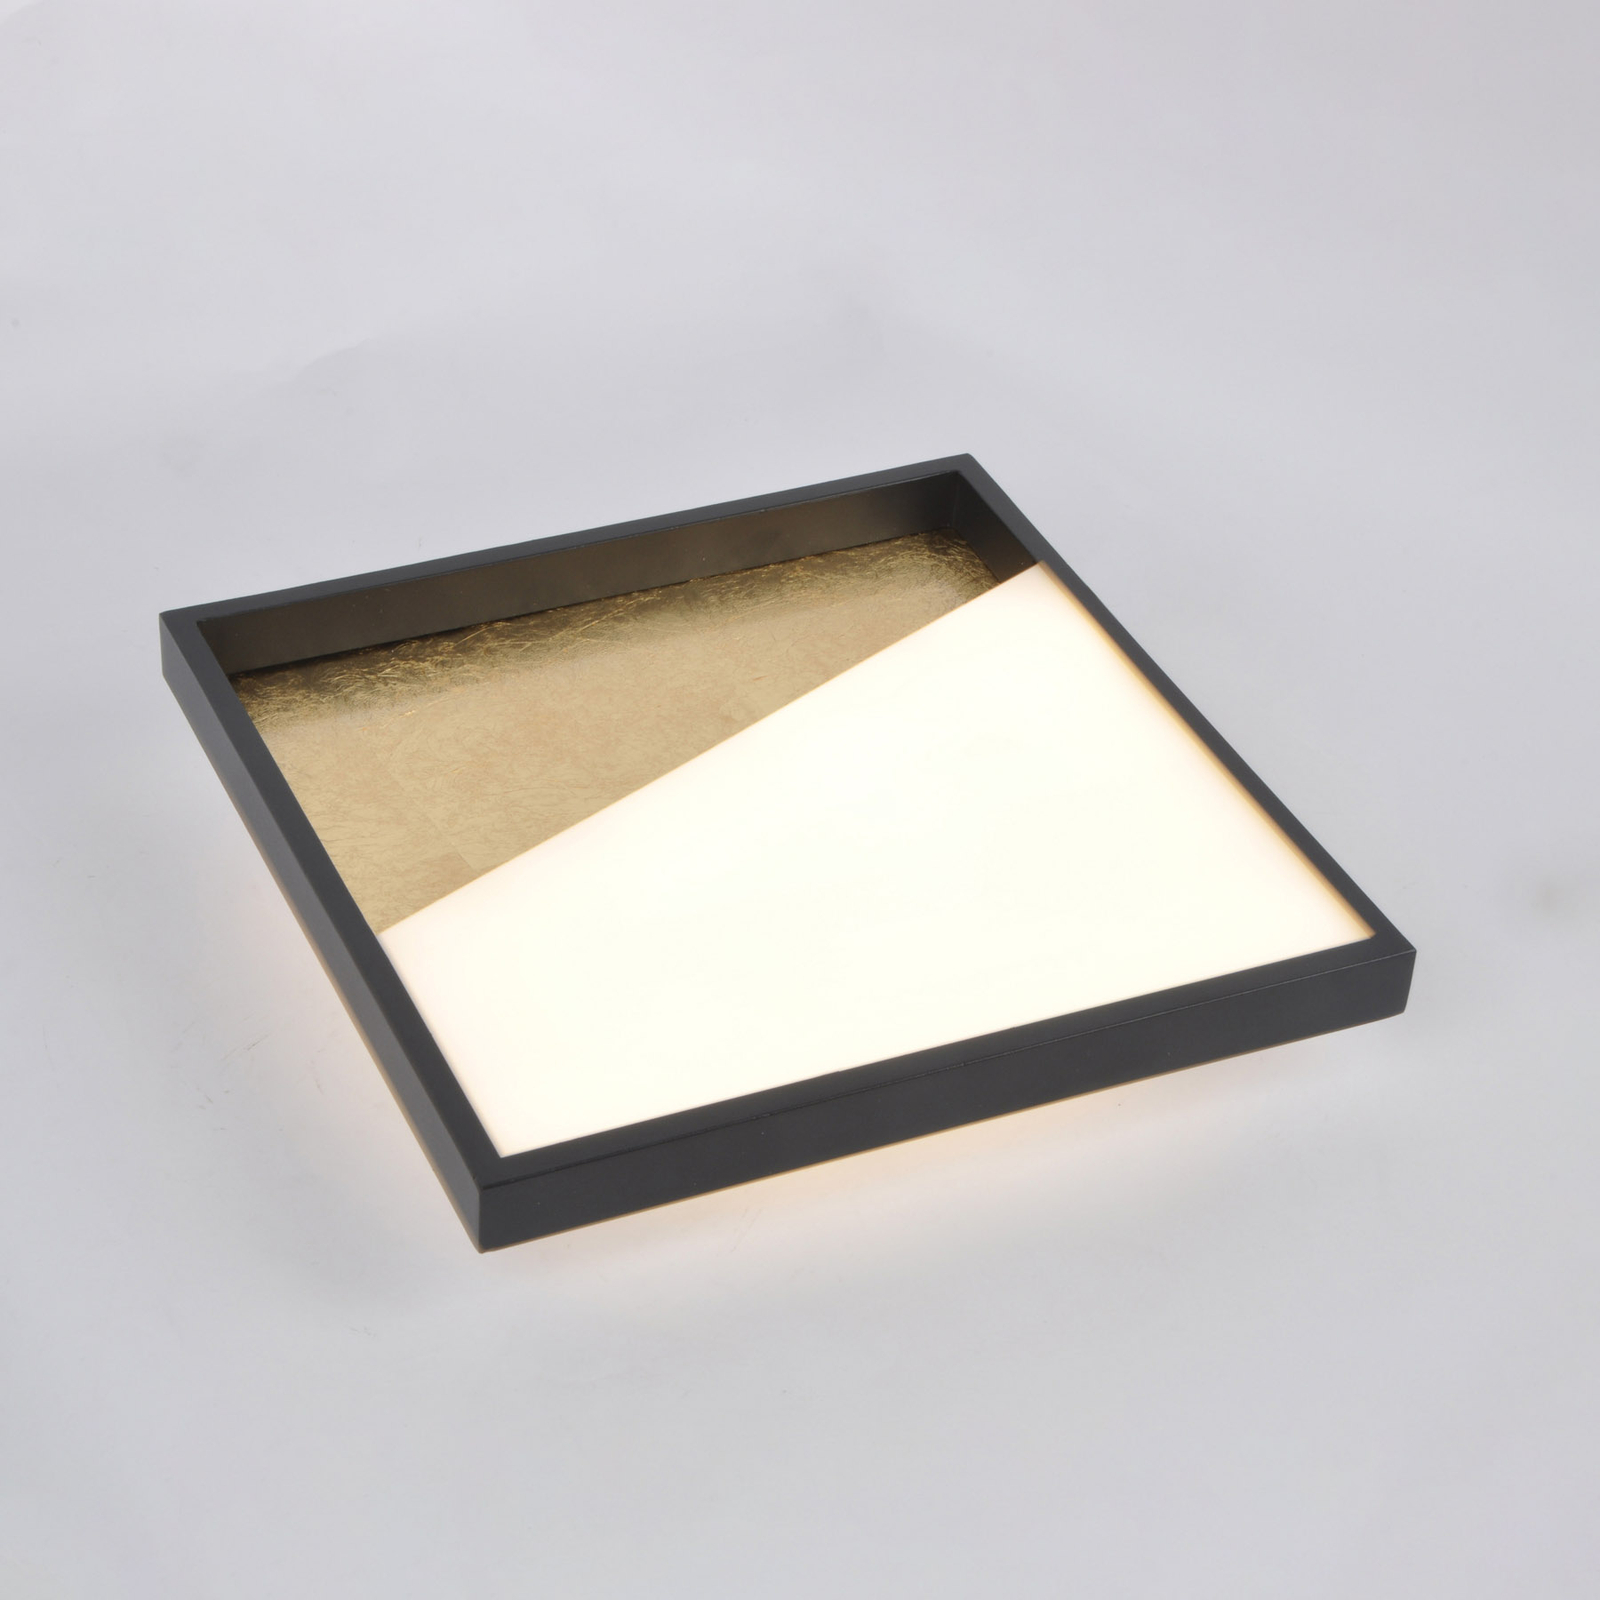 LED wall light Vista, gold/black, 30 x 30 cm